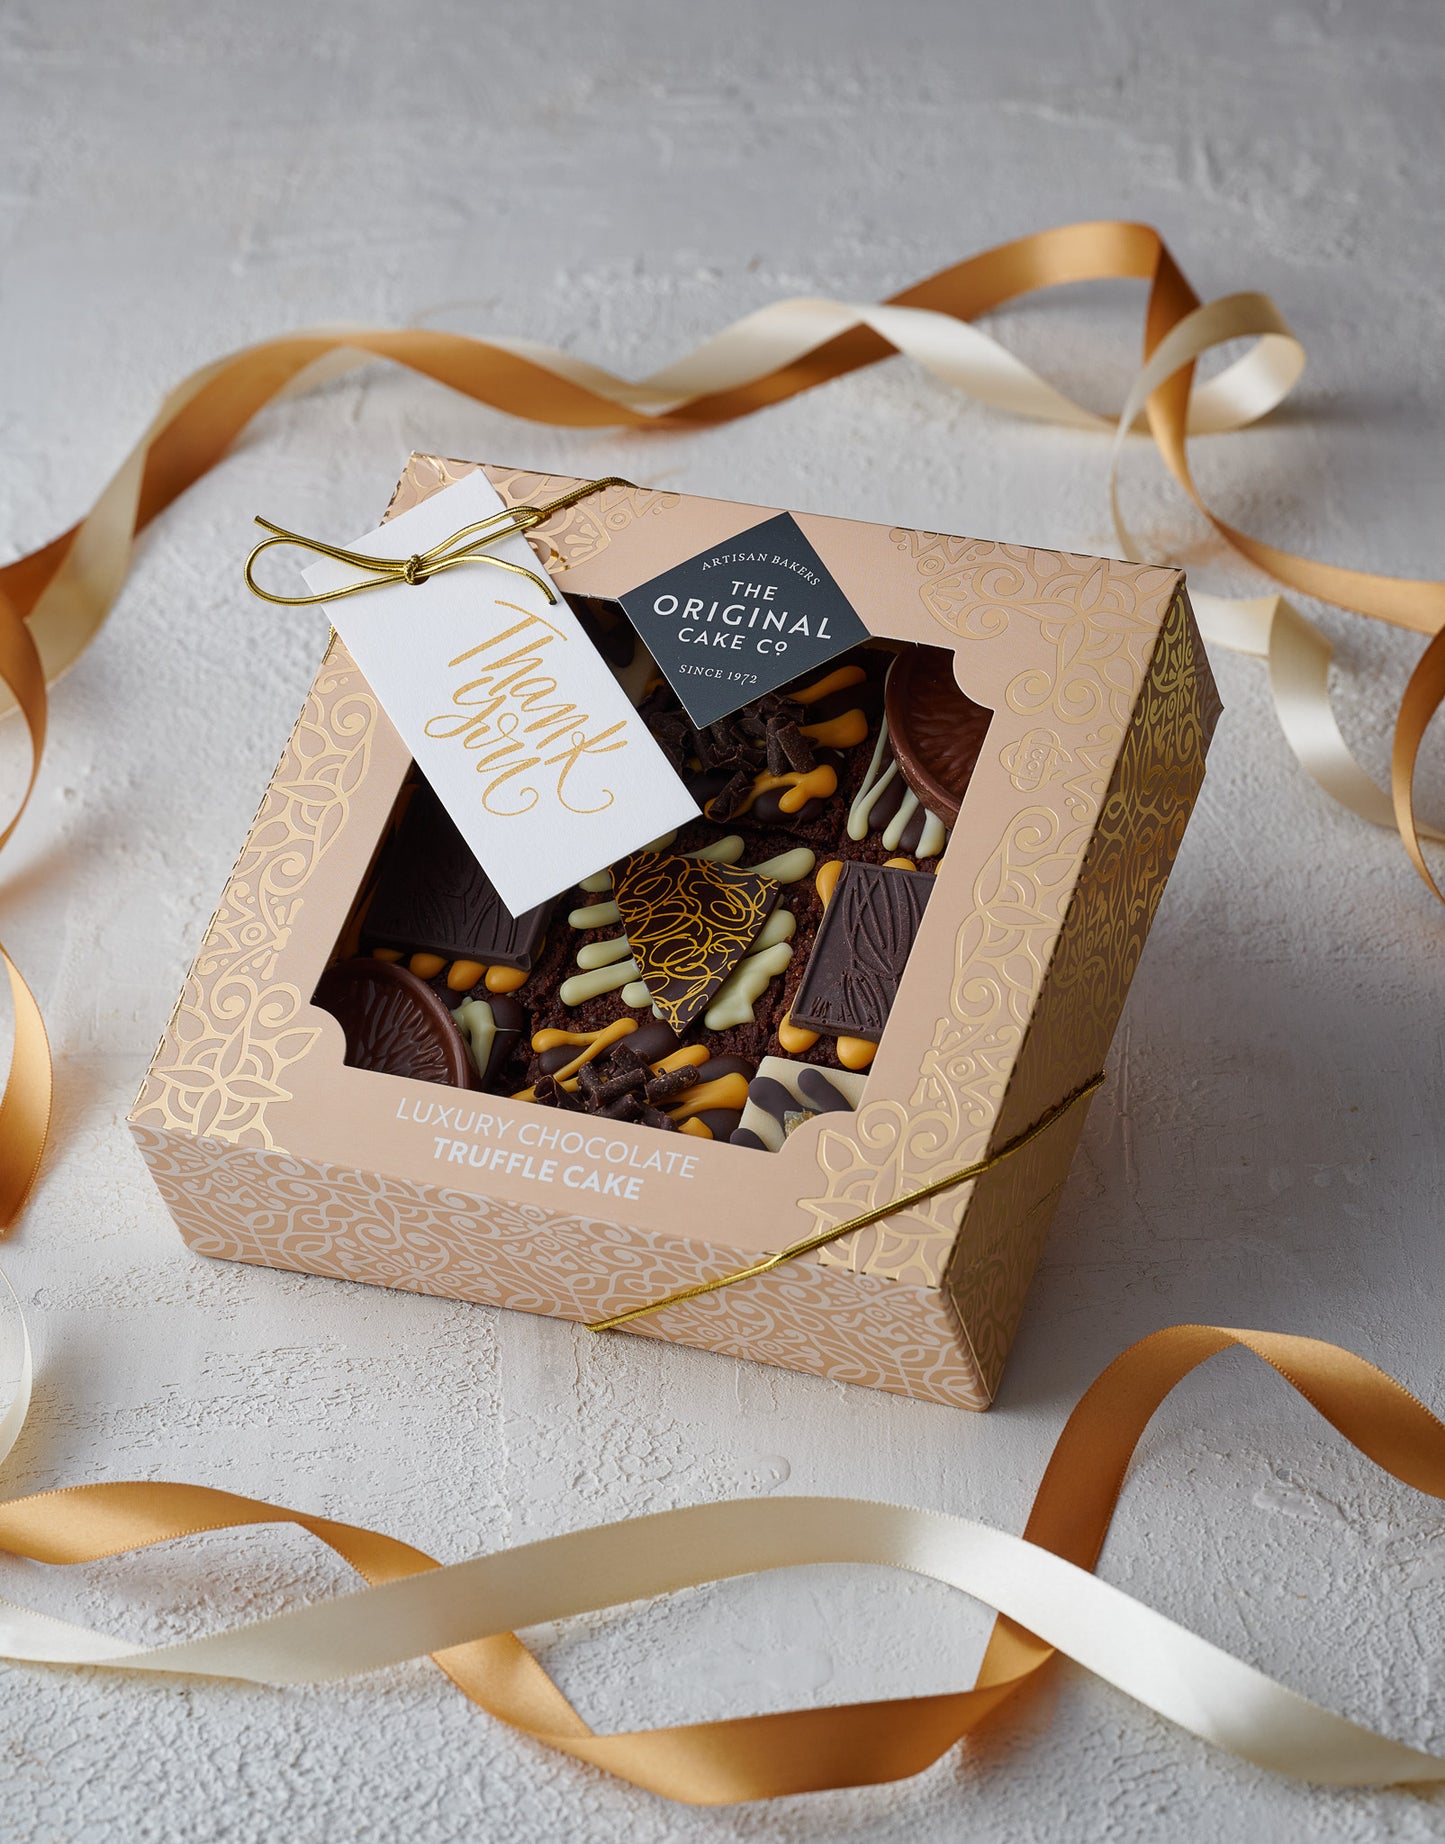 Chocolate Orange Truffle Cake Gift Box